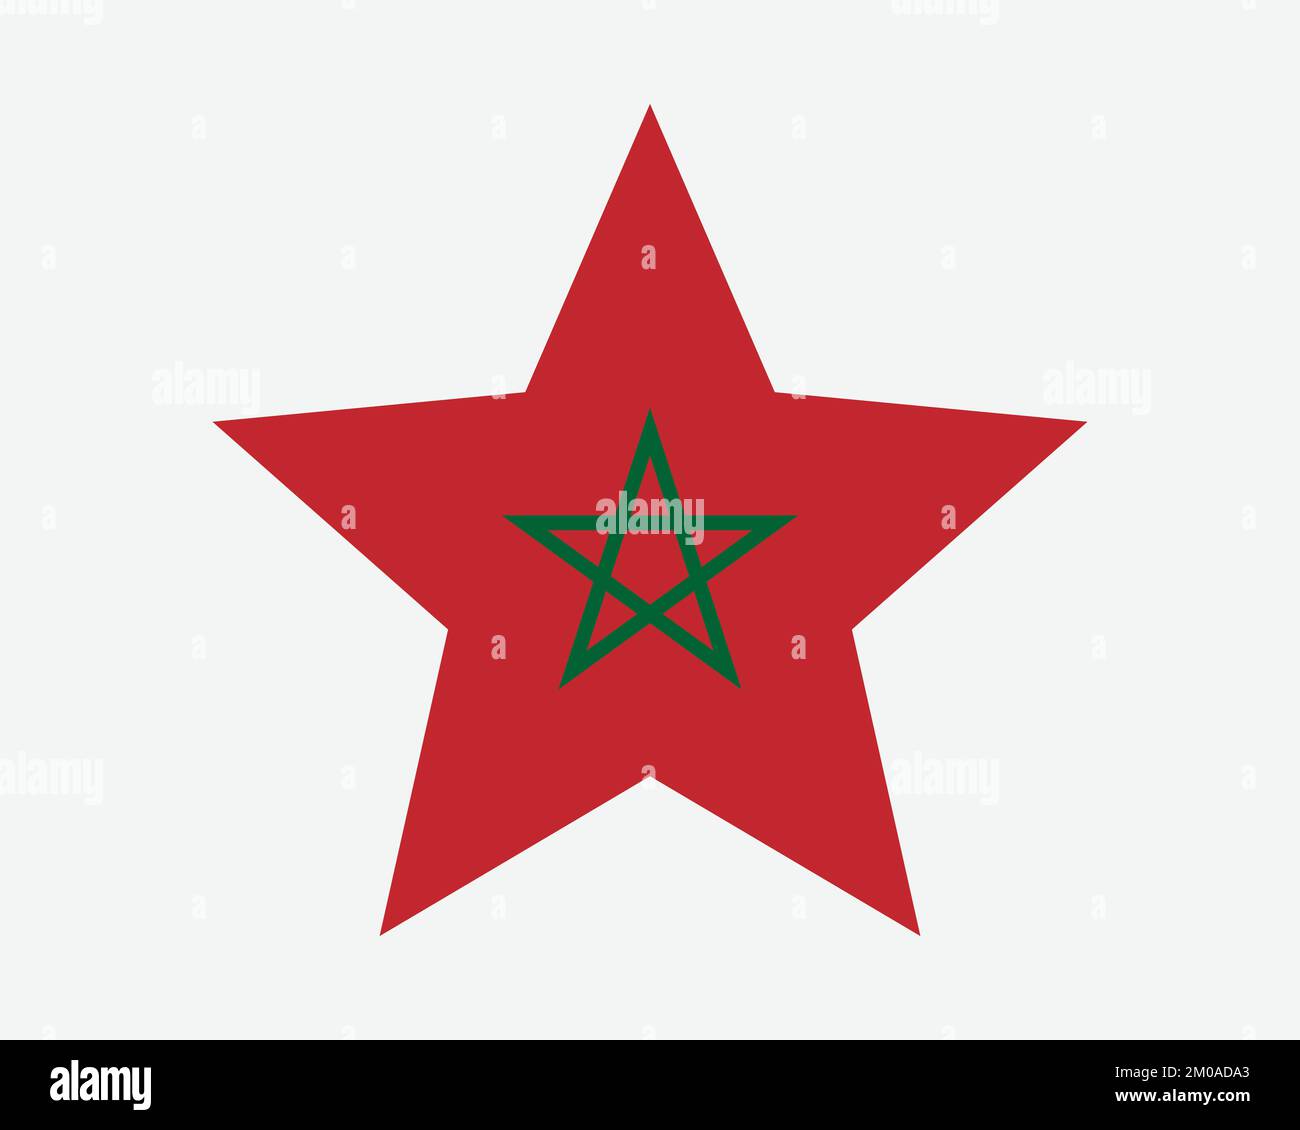 Marokkanische Sternflagge. Marokkanische Sternenflagge. Königreich Marokko Land nationales Banner Symbol Vektor flache Kunstwerke Grafik Stock Vektor